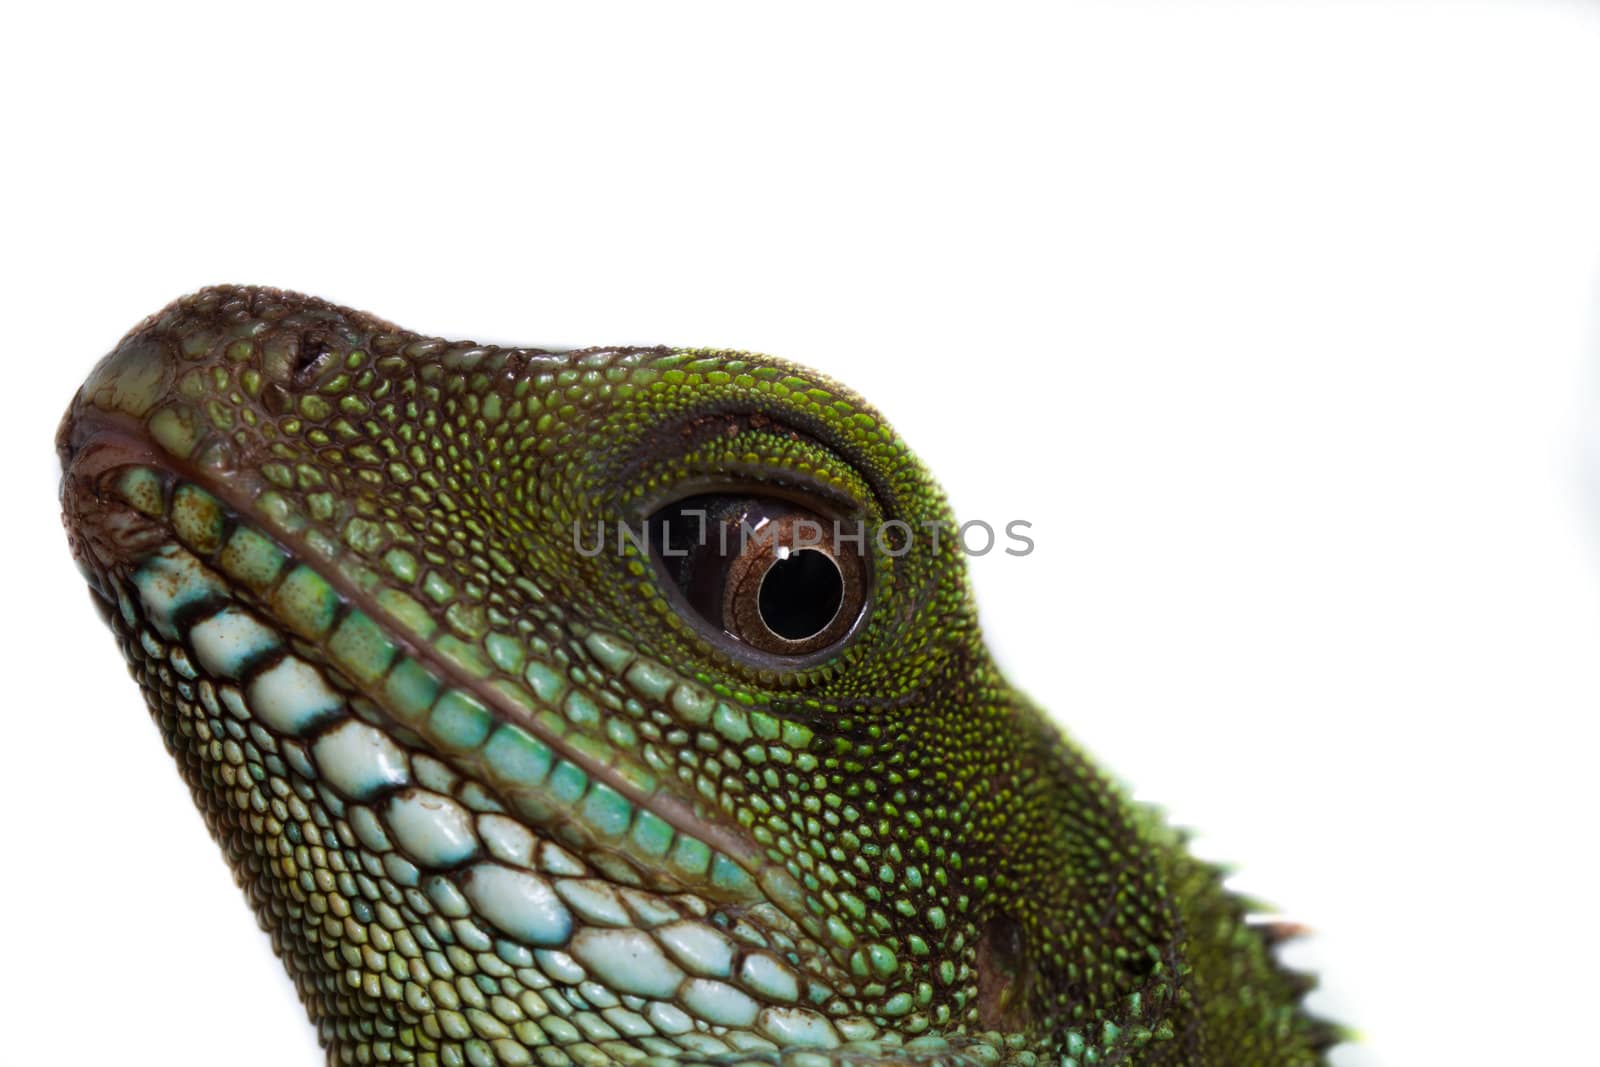 Head and eye of an adult agama (Physignathus cocincinu)